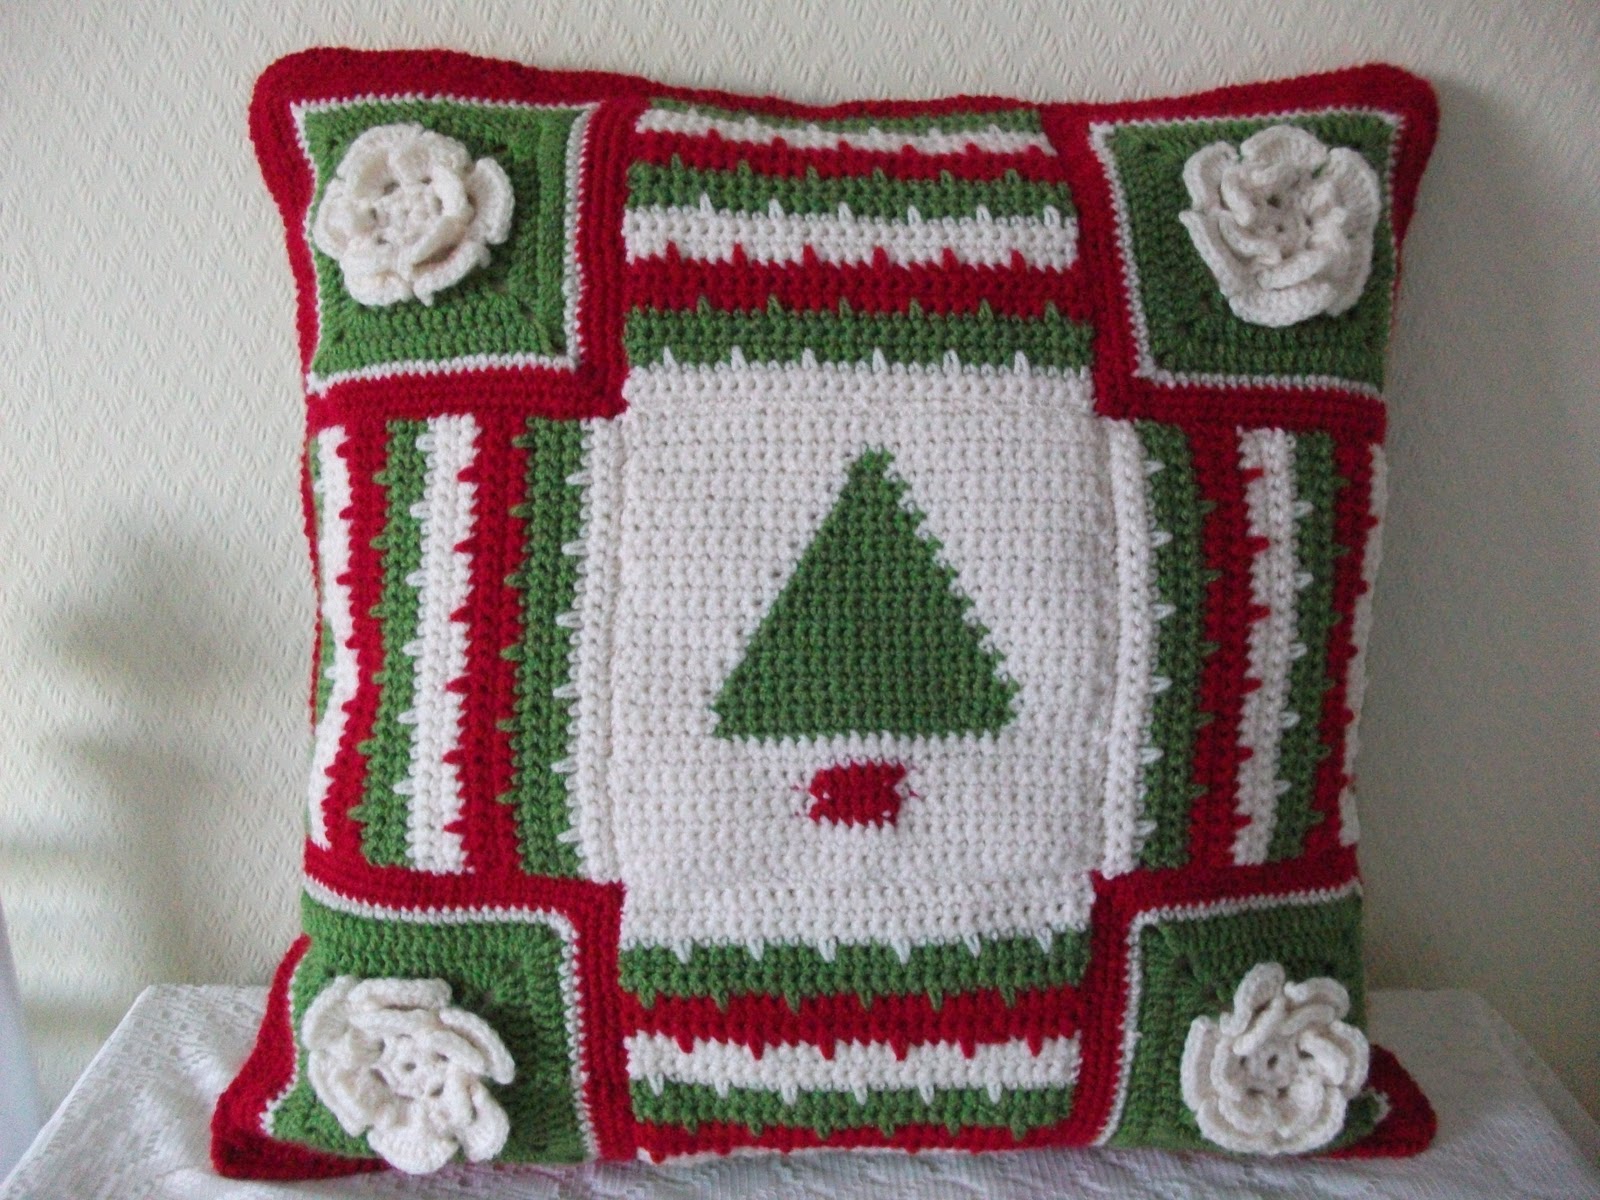 .Linda's Crafty Corner: Christmas cushion